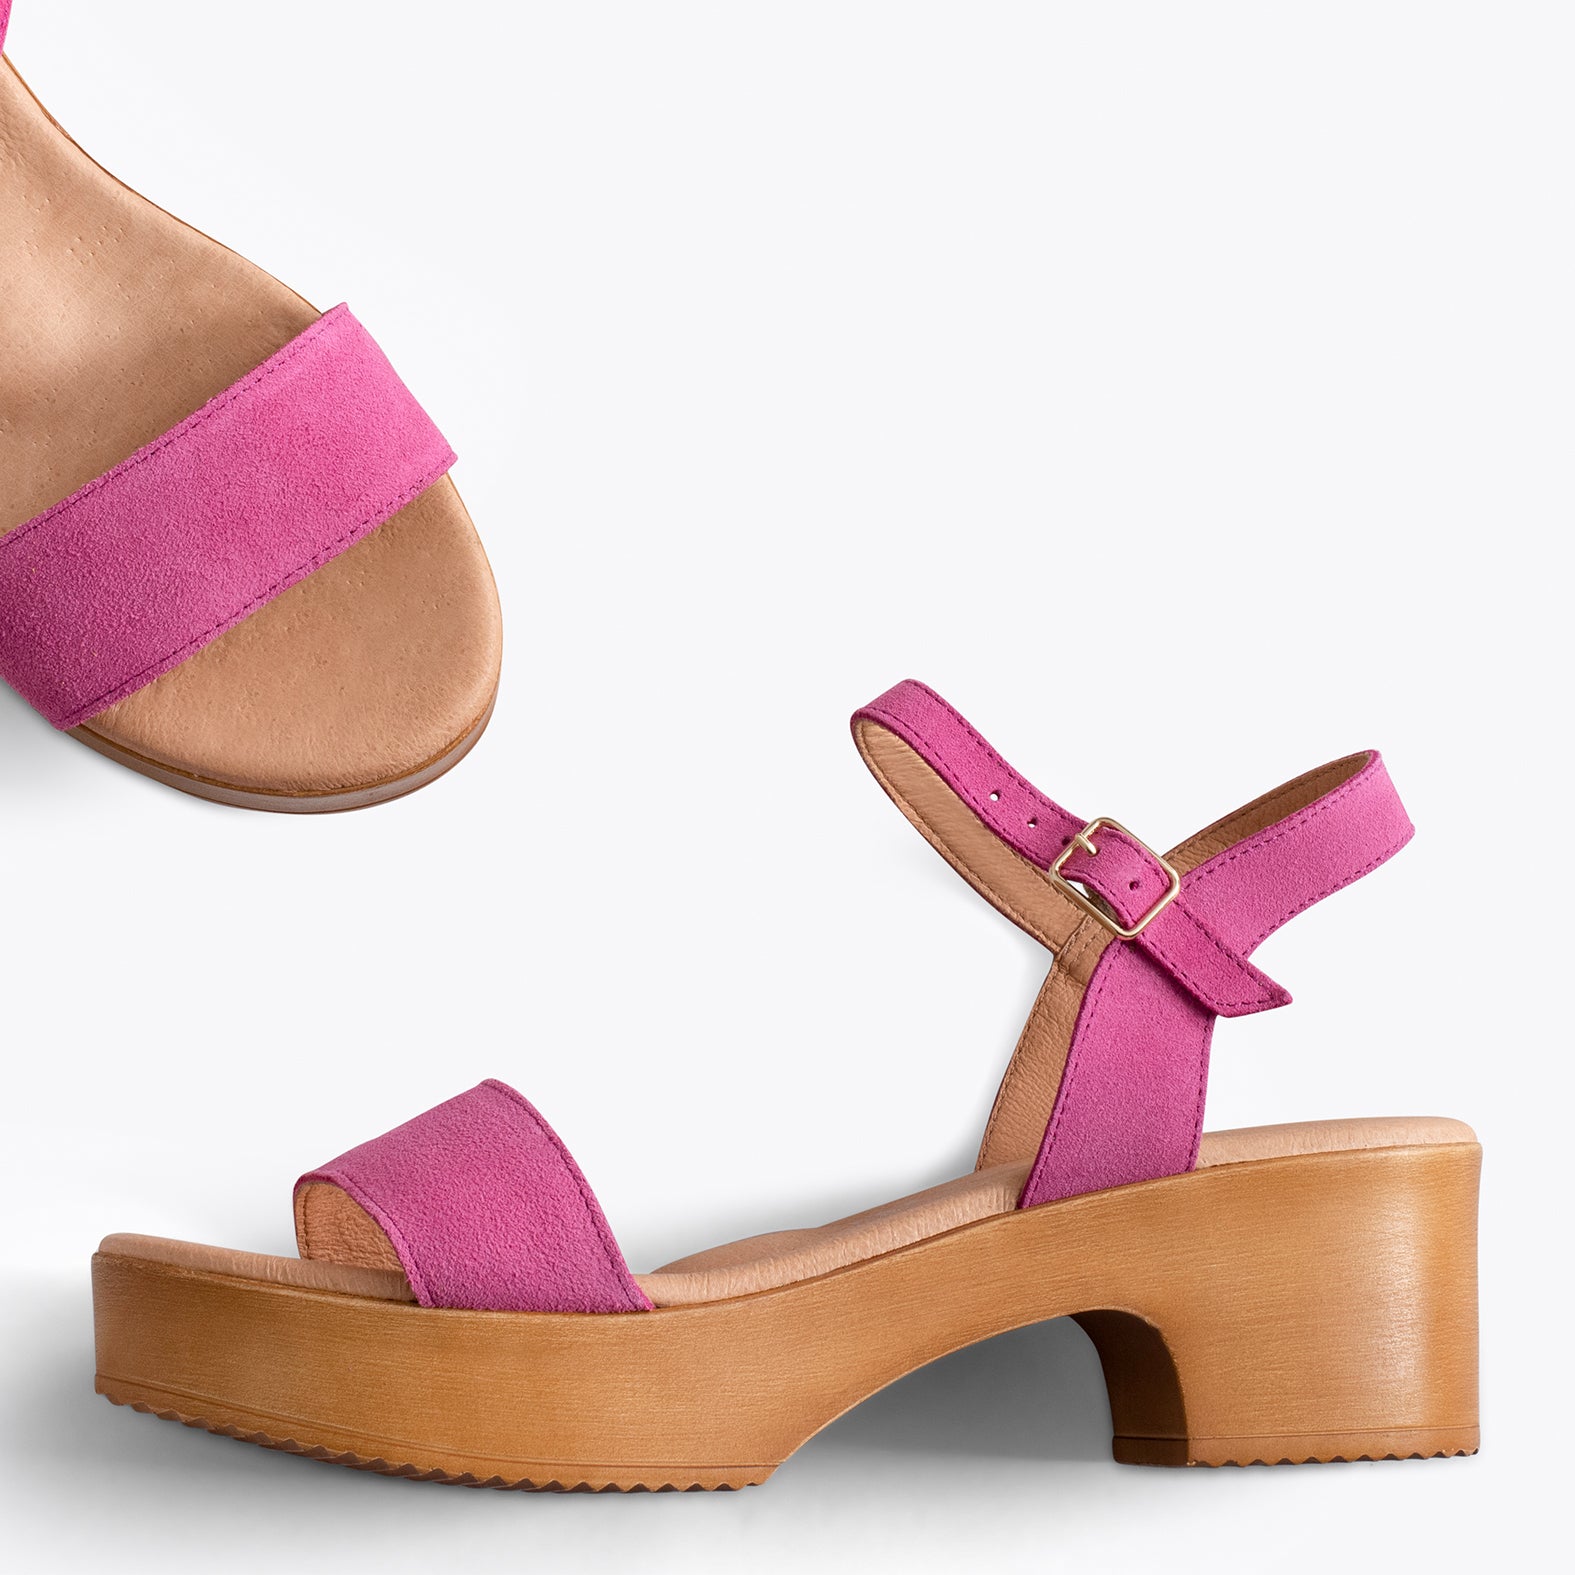 CALA – FUCHSIA sandals with platform